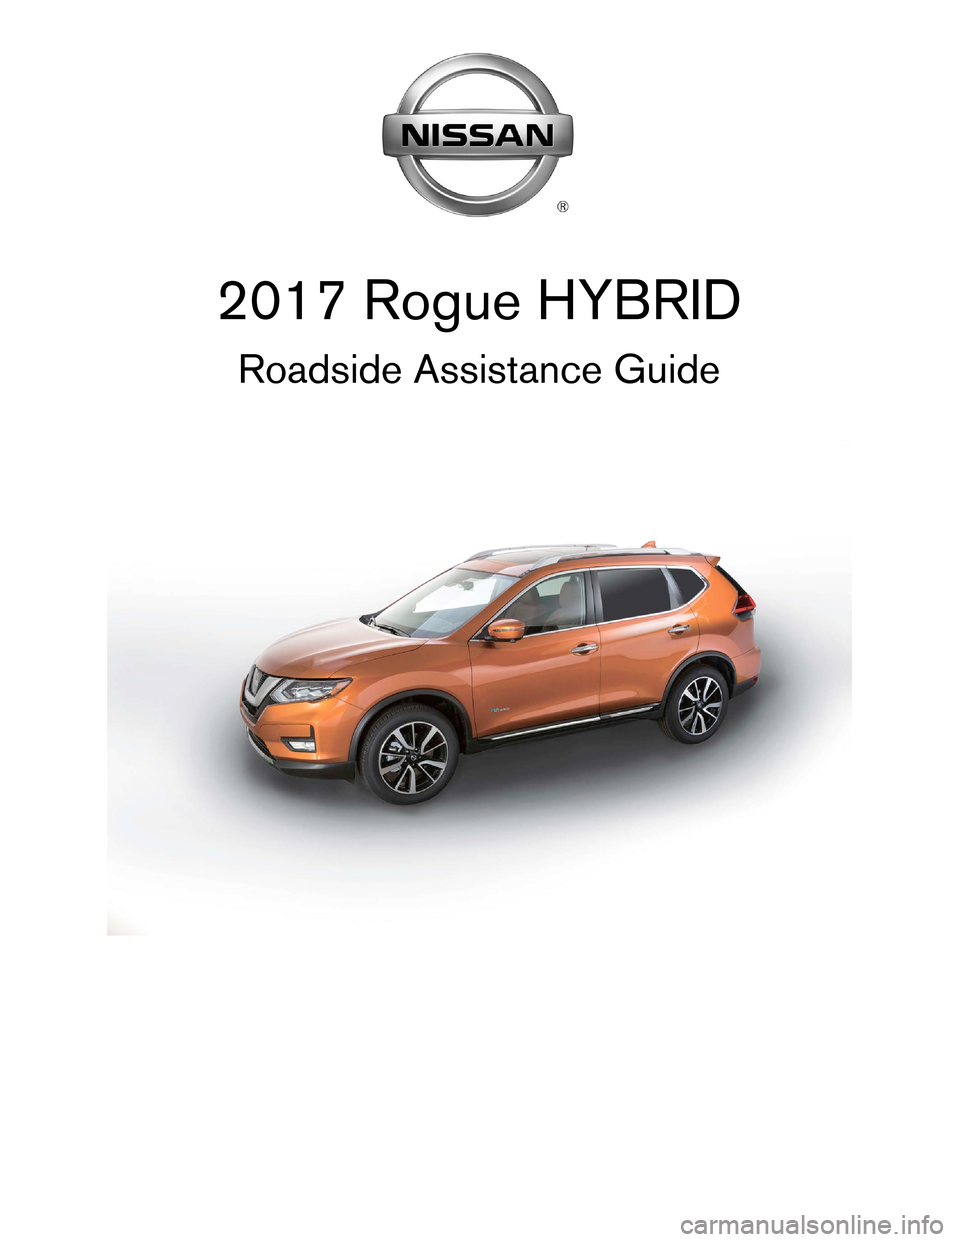 NISSAN ROGUE HYBRID 2017 2.G Roadside Assistance Guide 2017 Rogue HYBRID
Roadside Assistance Guide   